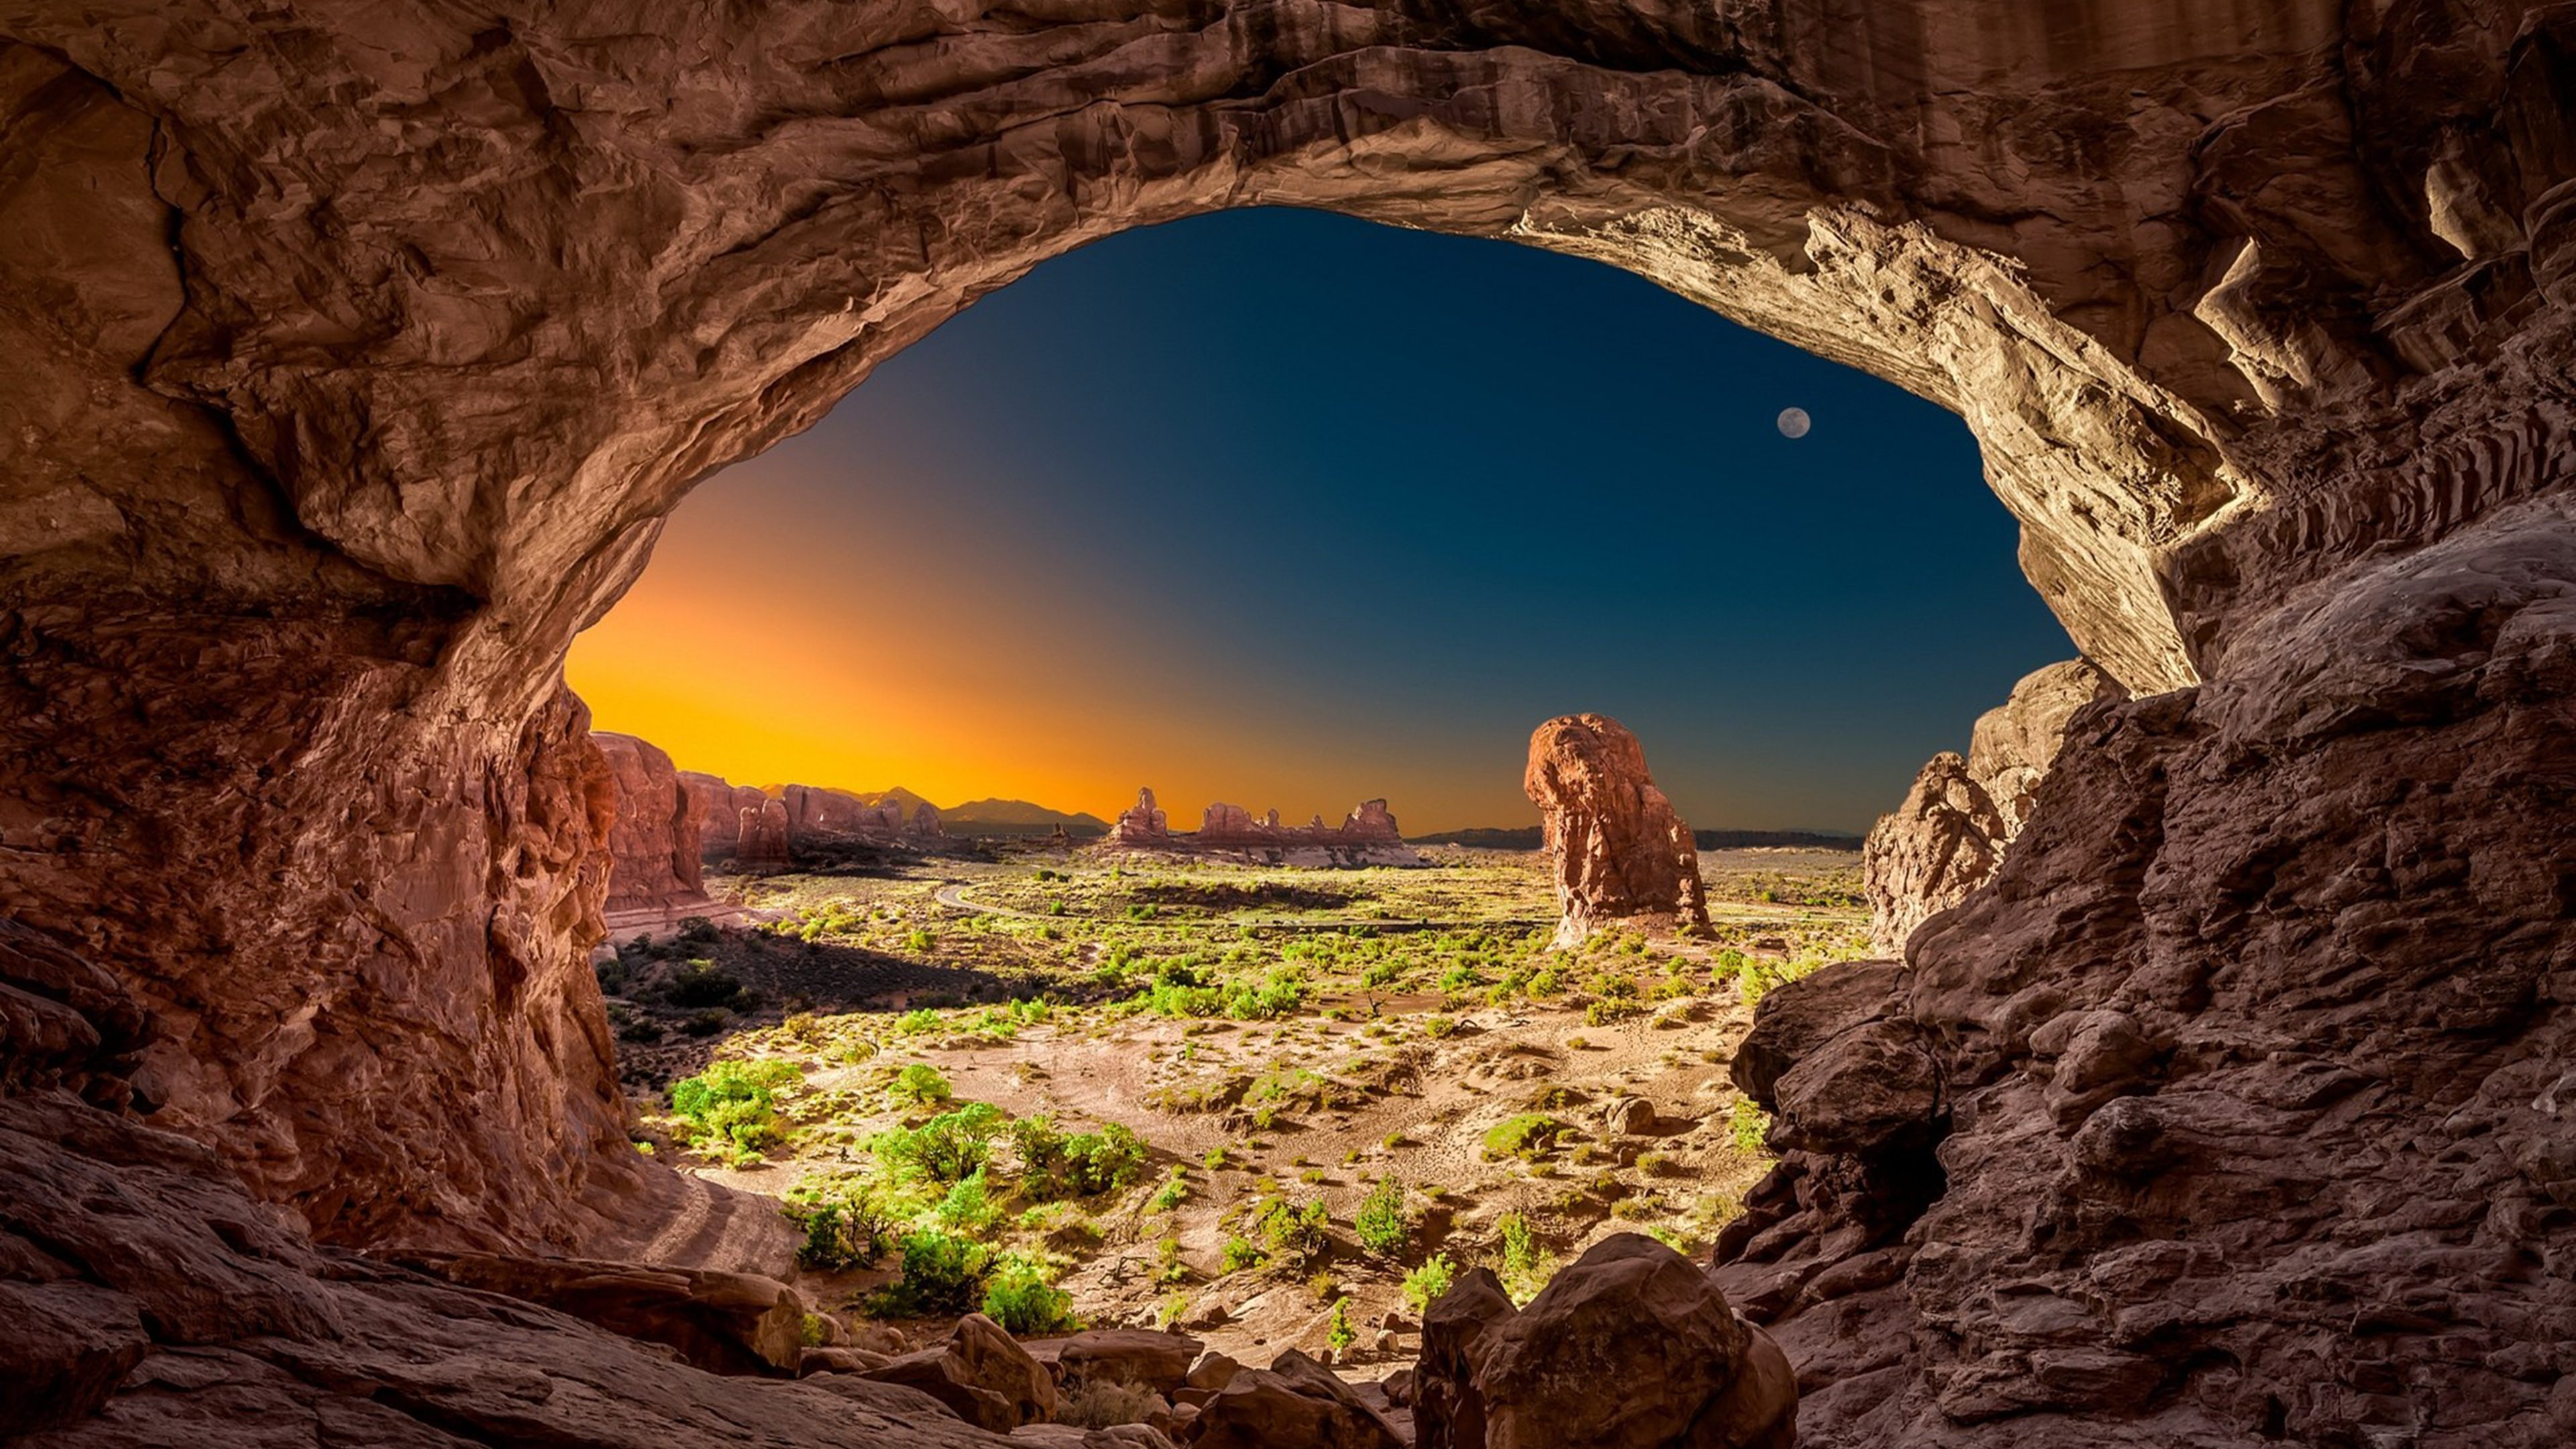 Art Of Nature Arches National Park Utah Desktop Hd Wallpaper Backgrounds Free Download